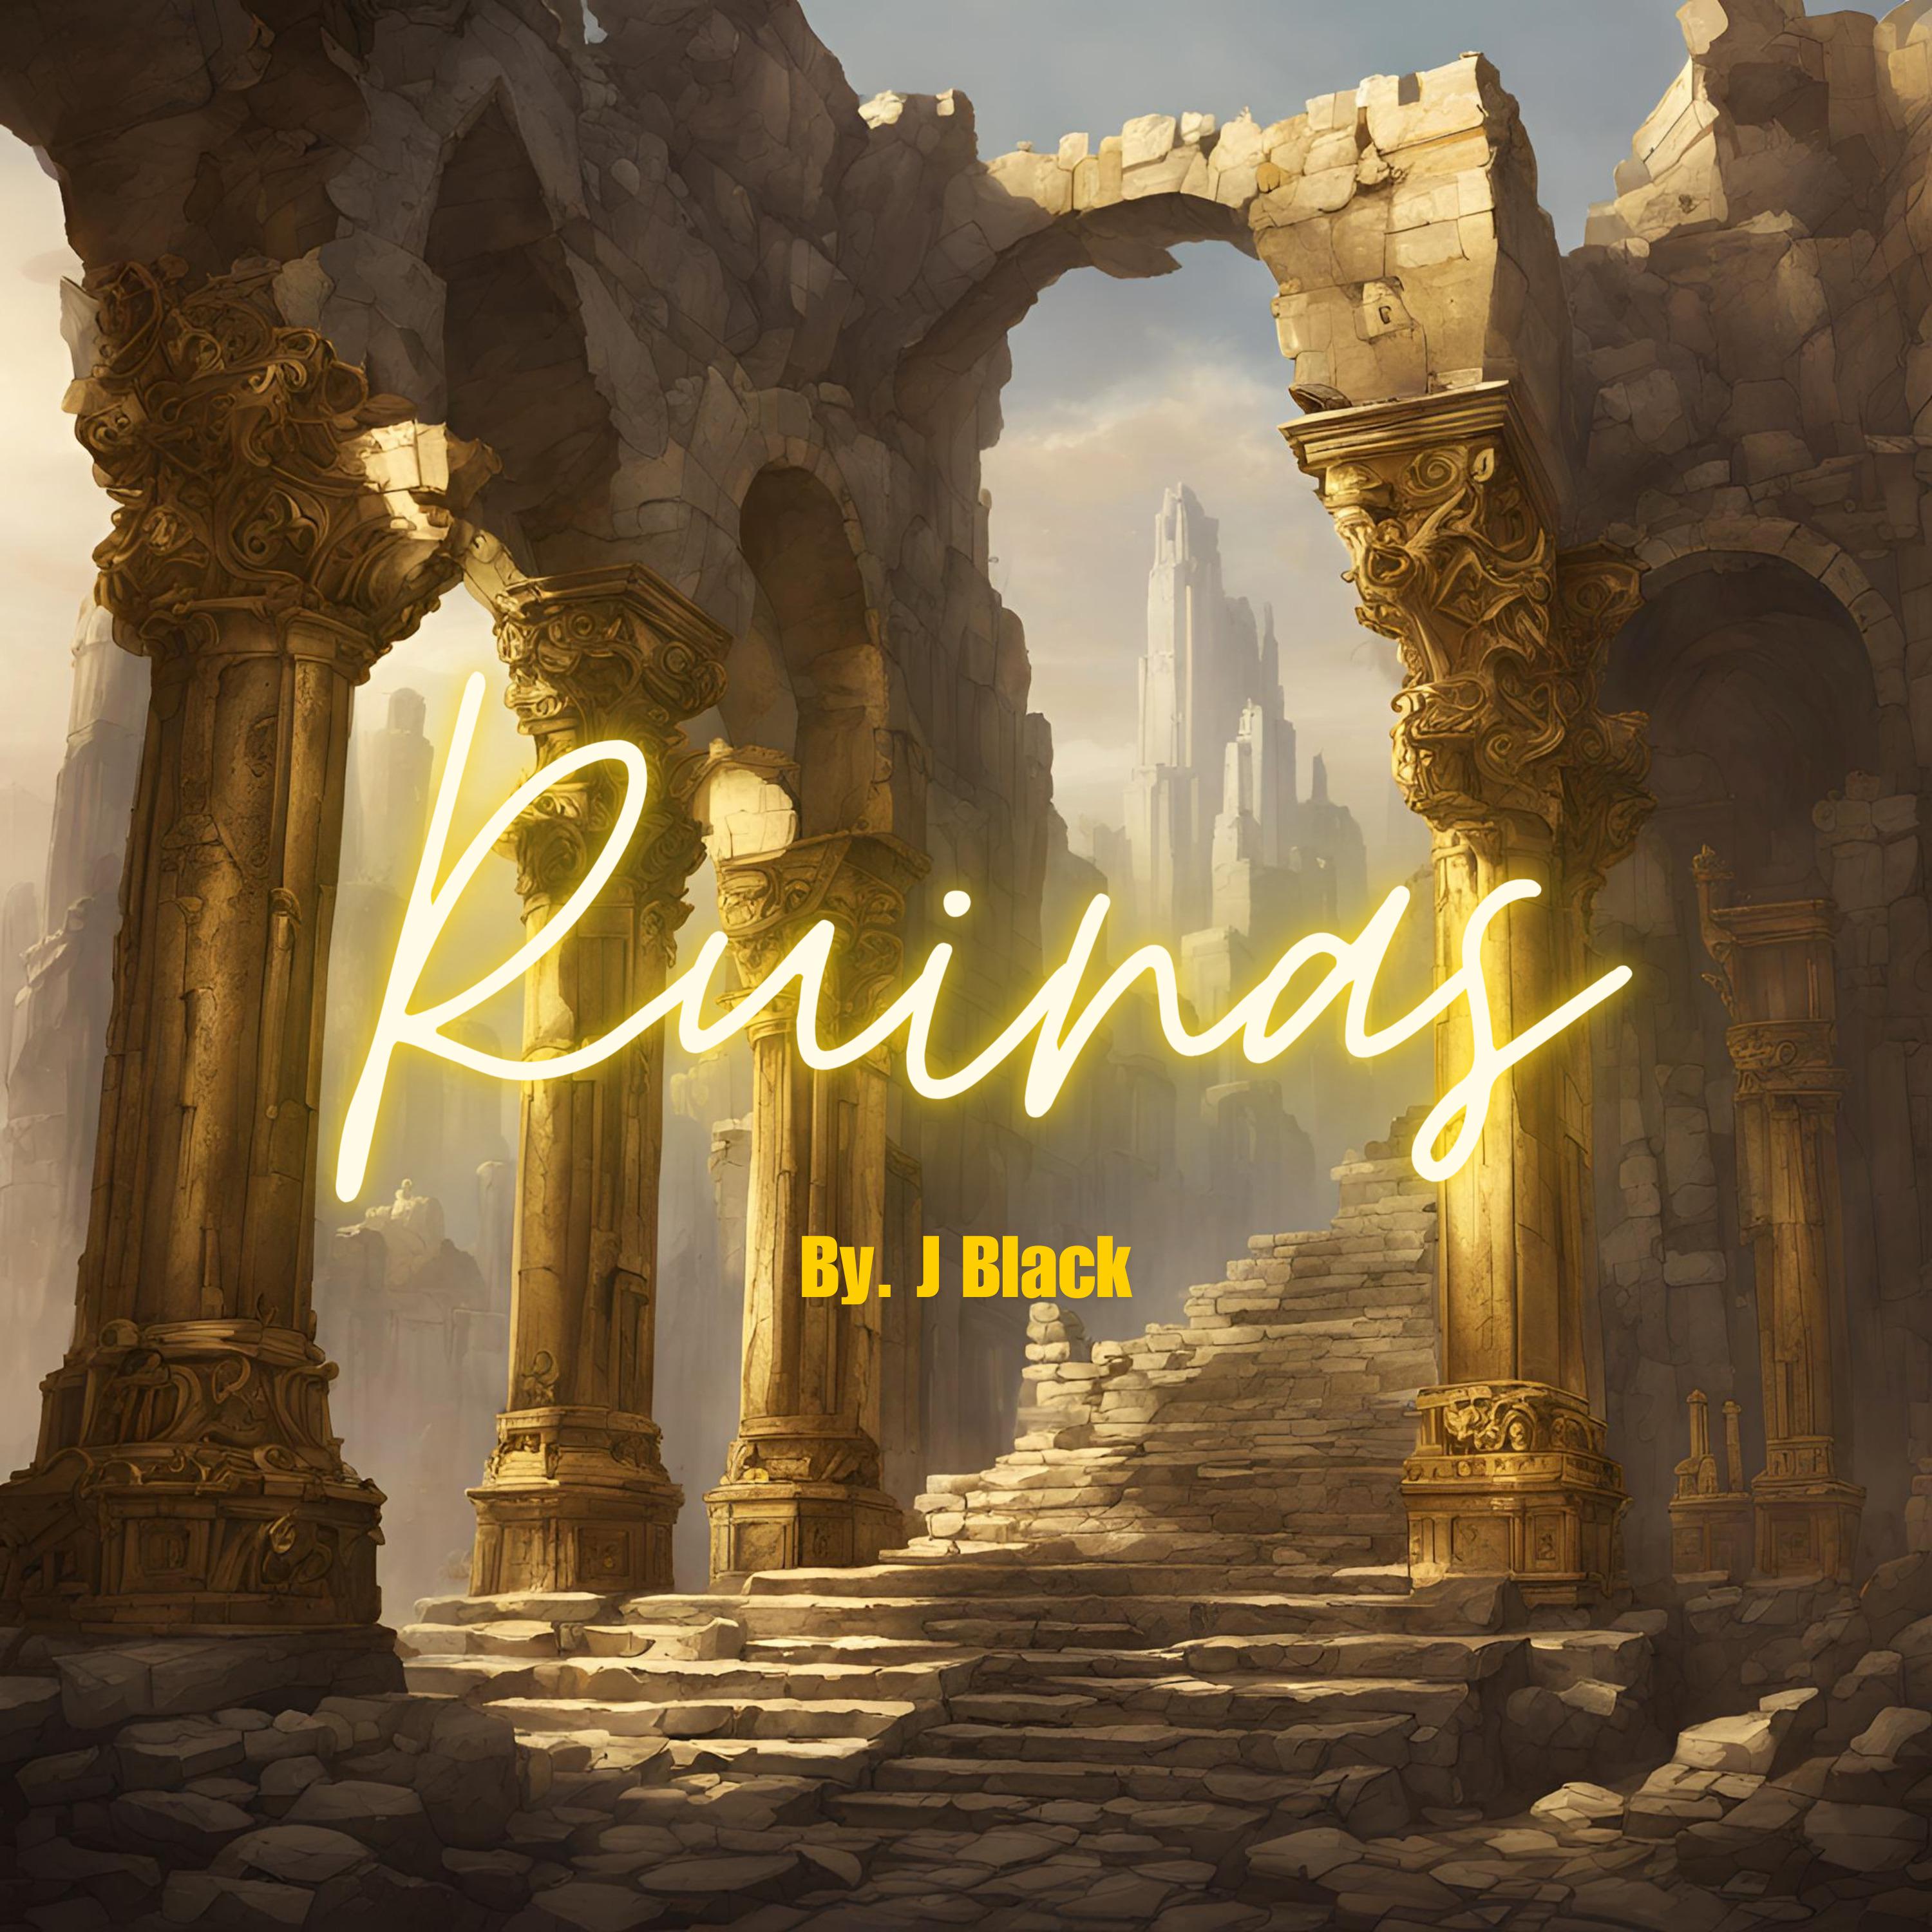 Постер альбома Ruinas